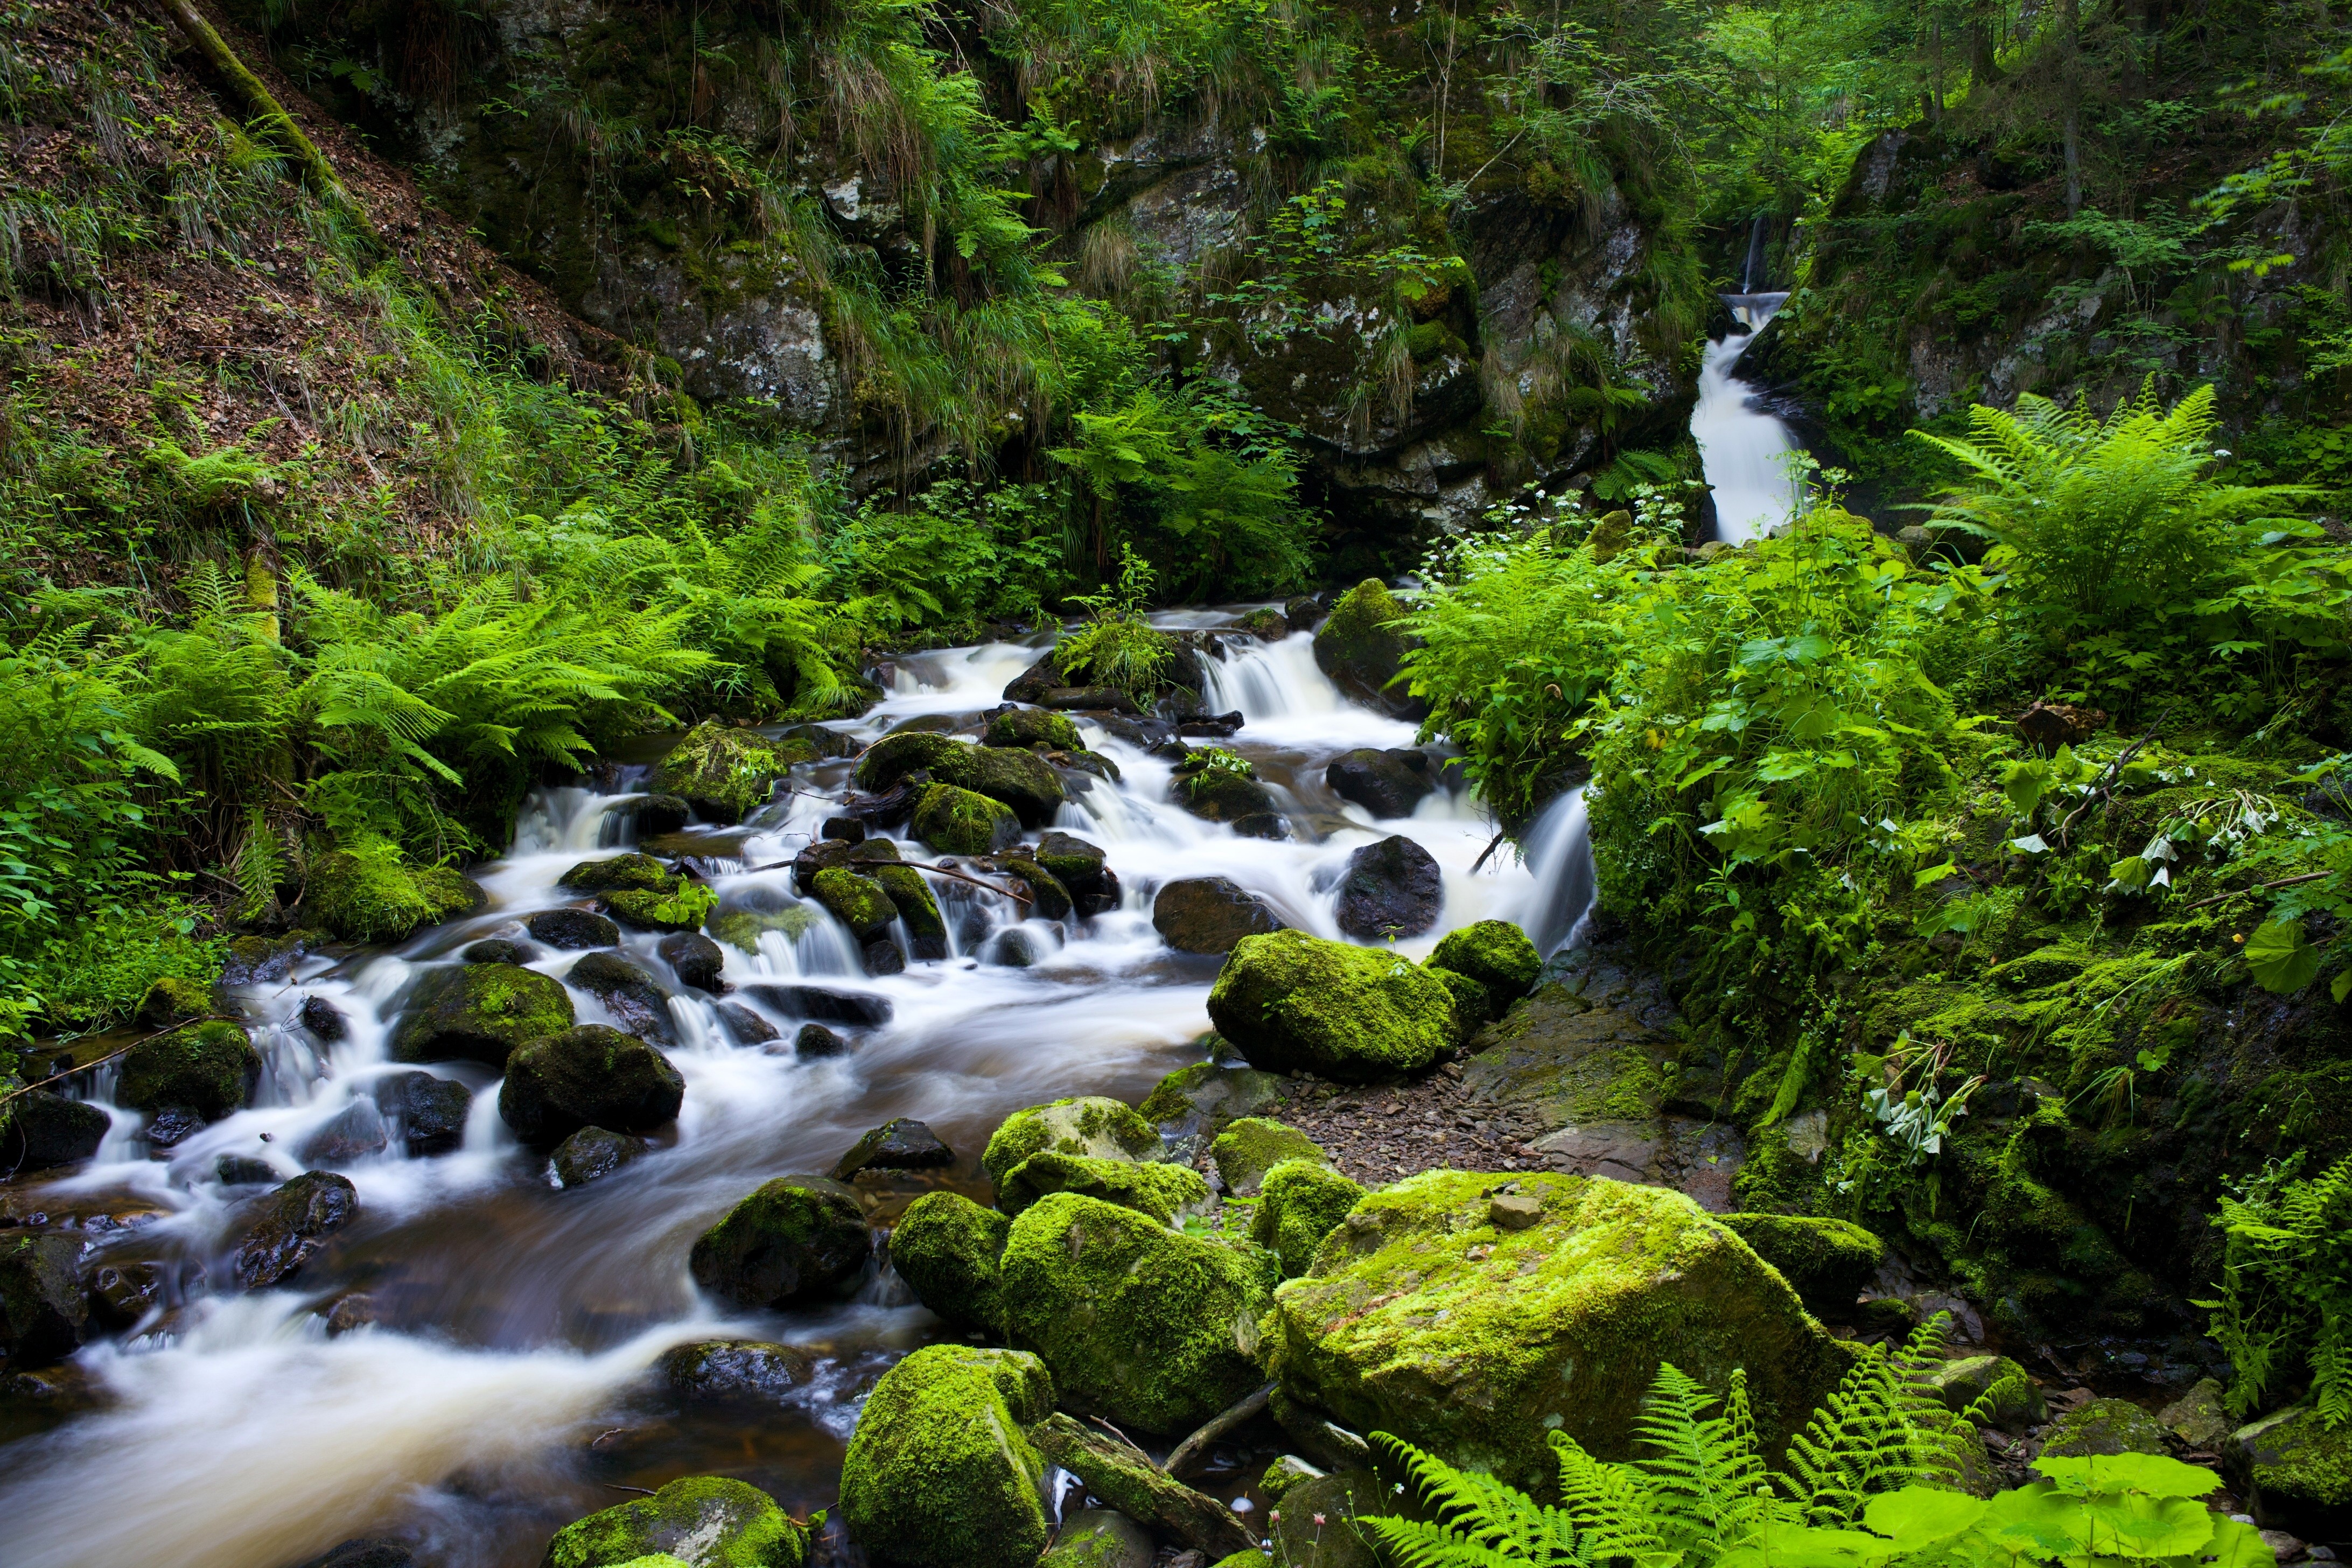 General 4368x2912 nature water creeks plants long exposure outdoors stones